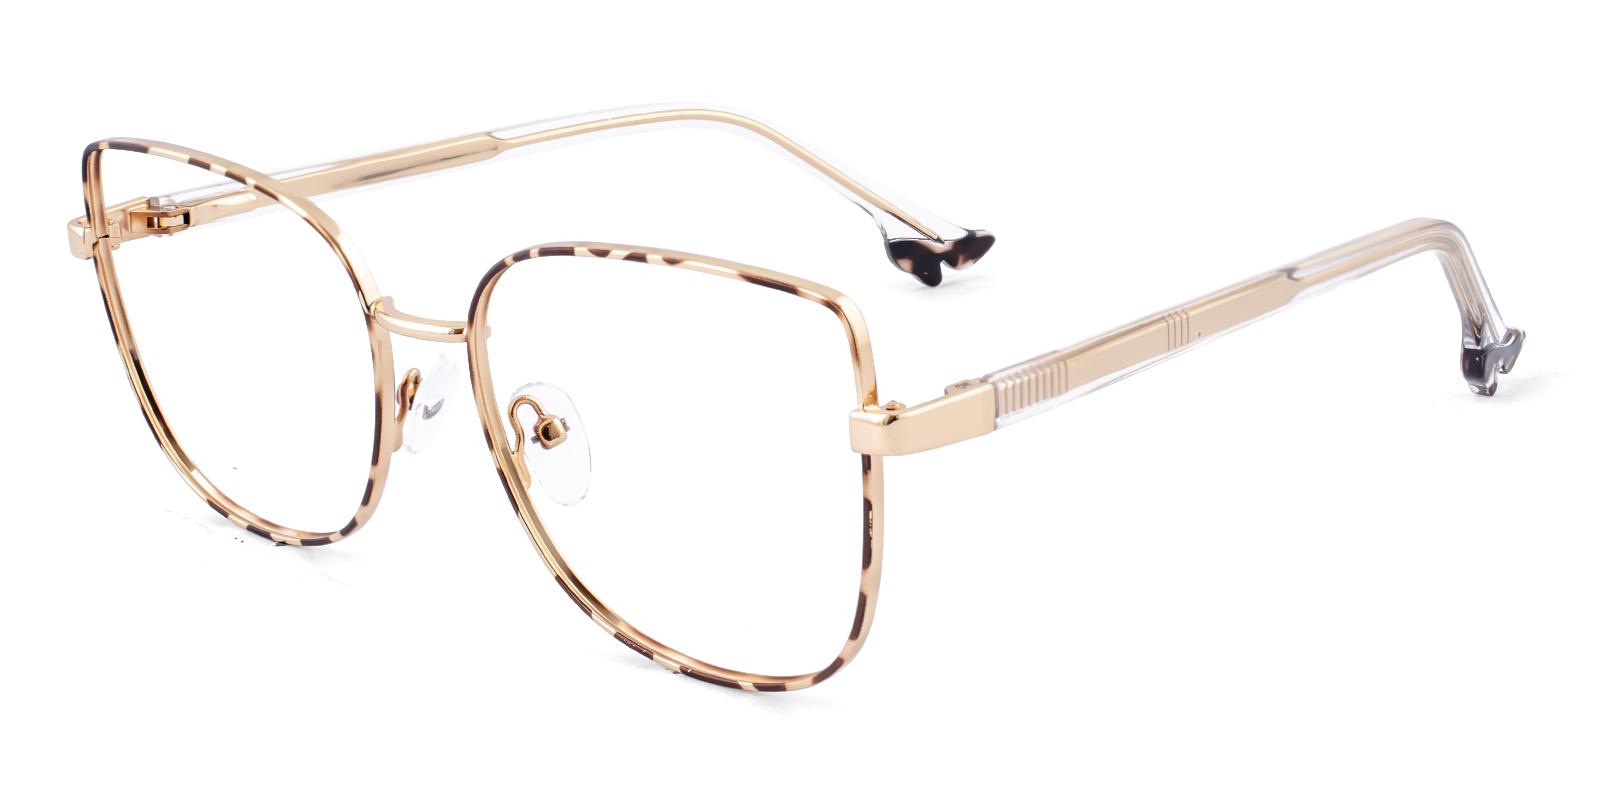 Plenilune Gold Metal Eyeglasses , SpringHinges , NosePads Frames from ABBE Glasses